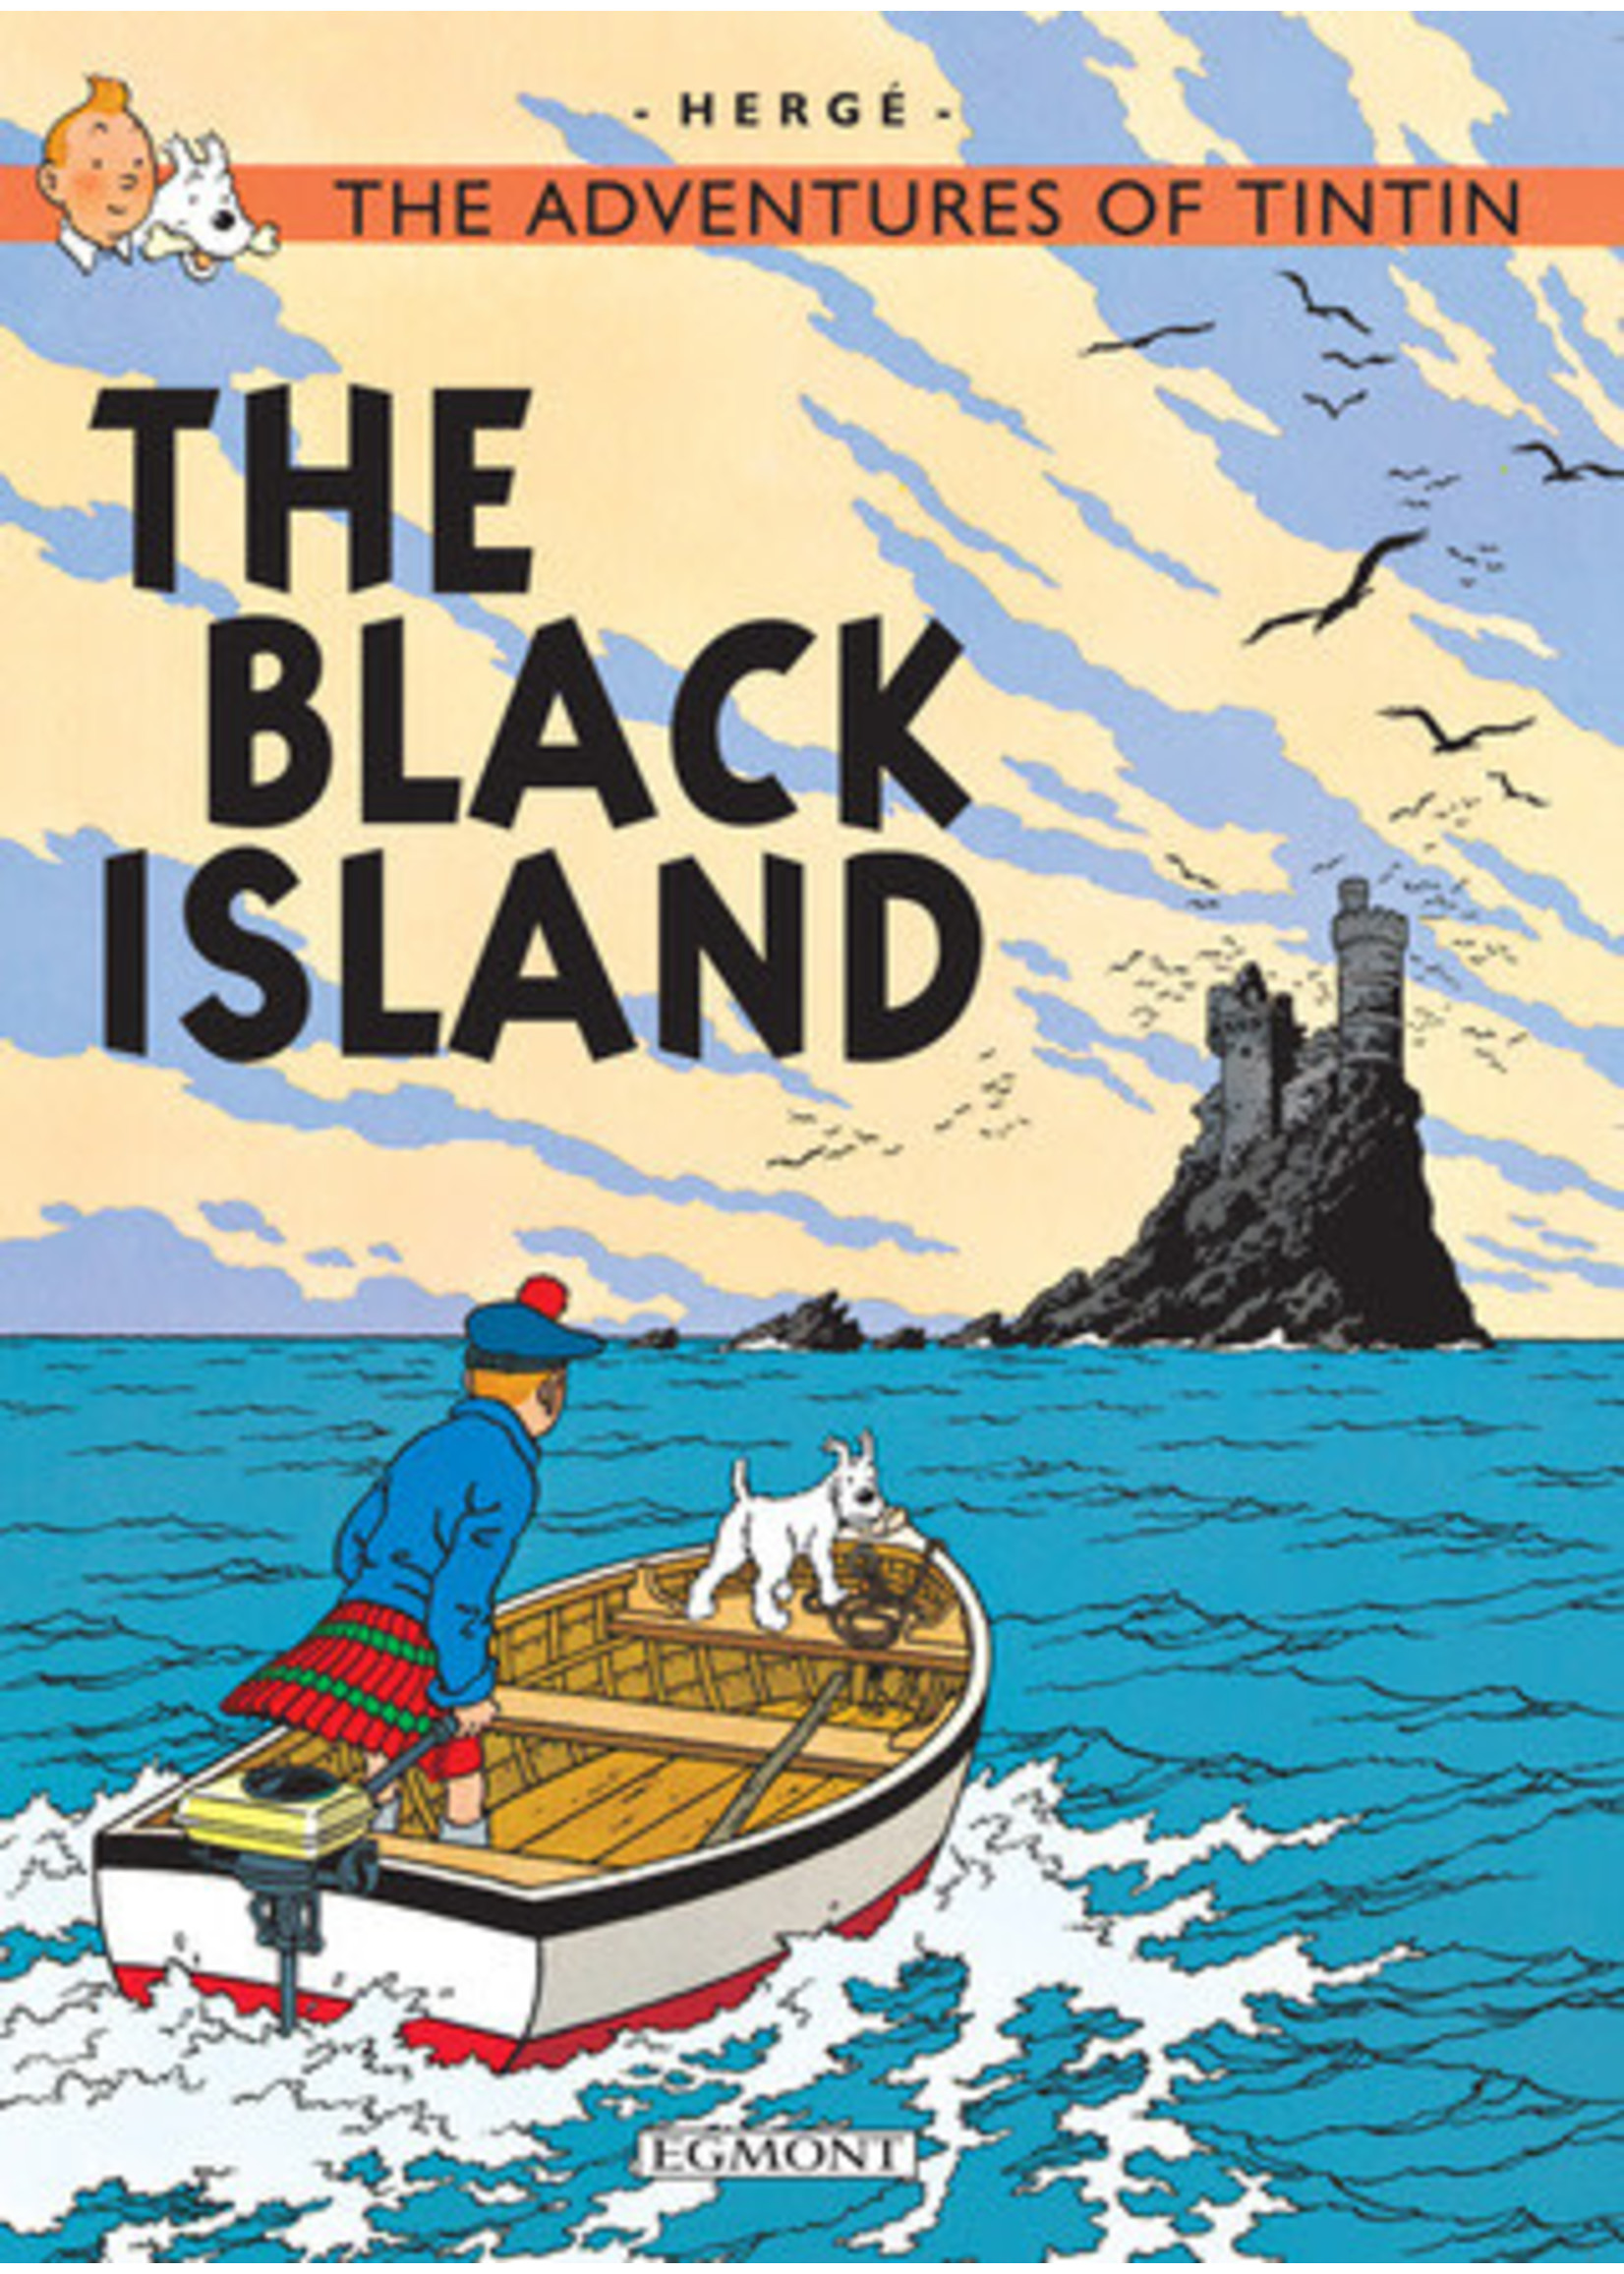 The Black Island (Tintin #7) by Hergé